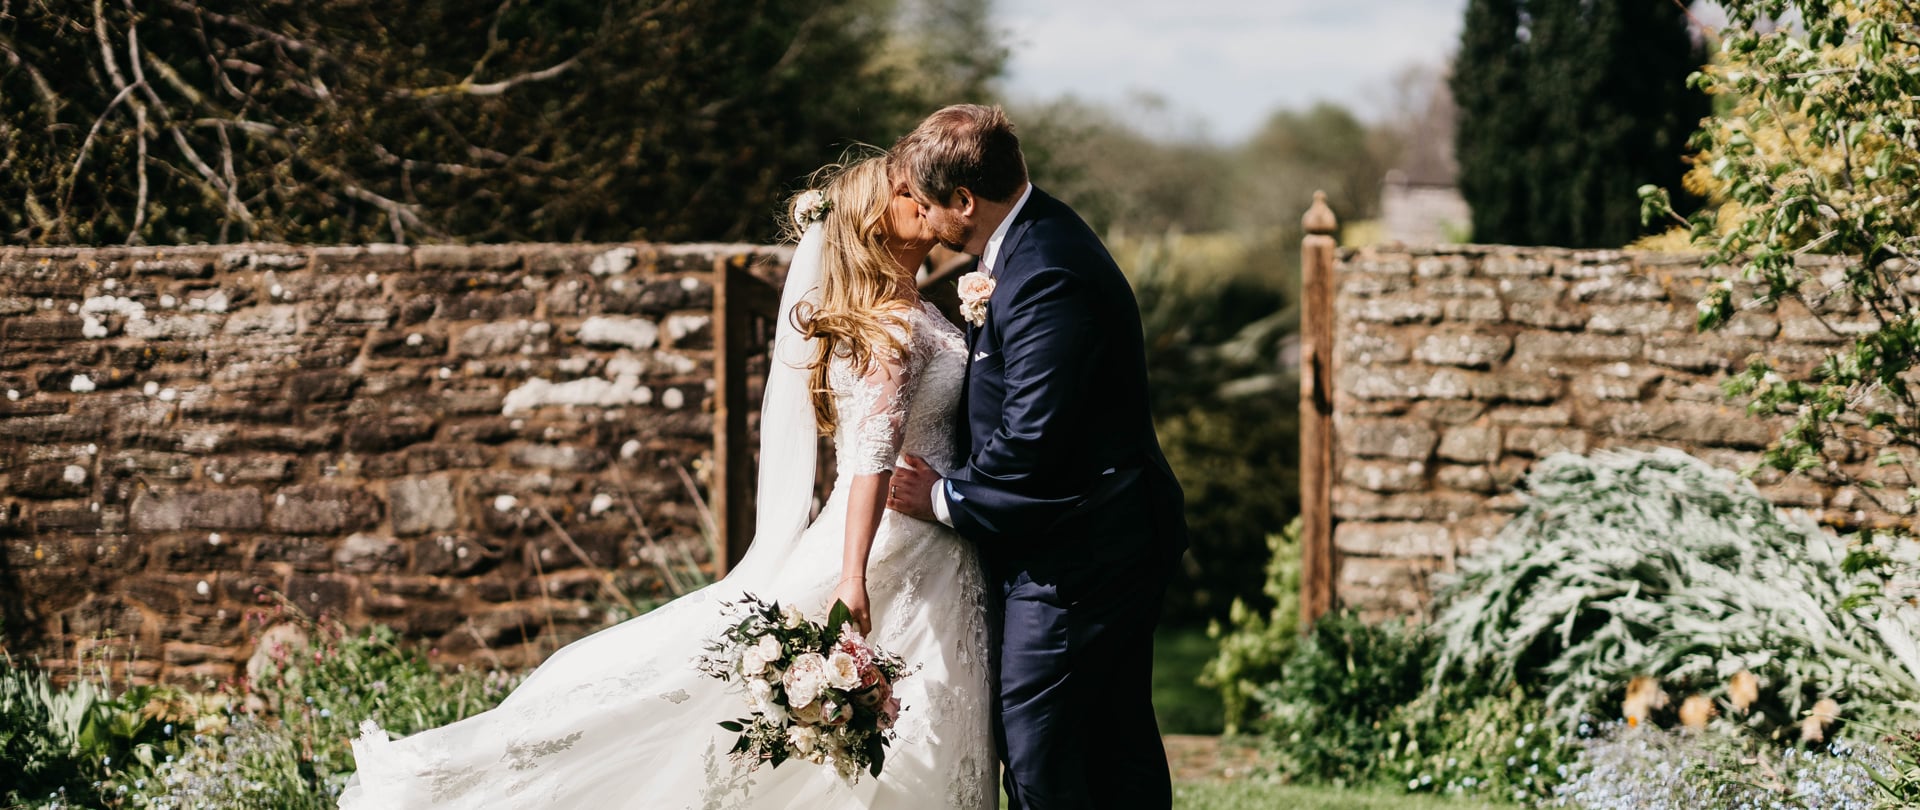 Sarah & Nick Wedding Video Filmed atHerefordshire,England